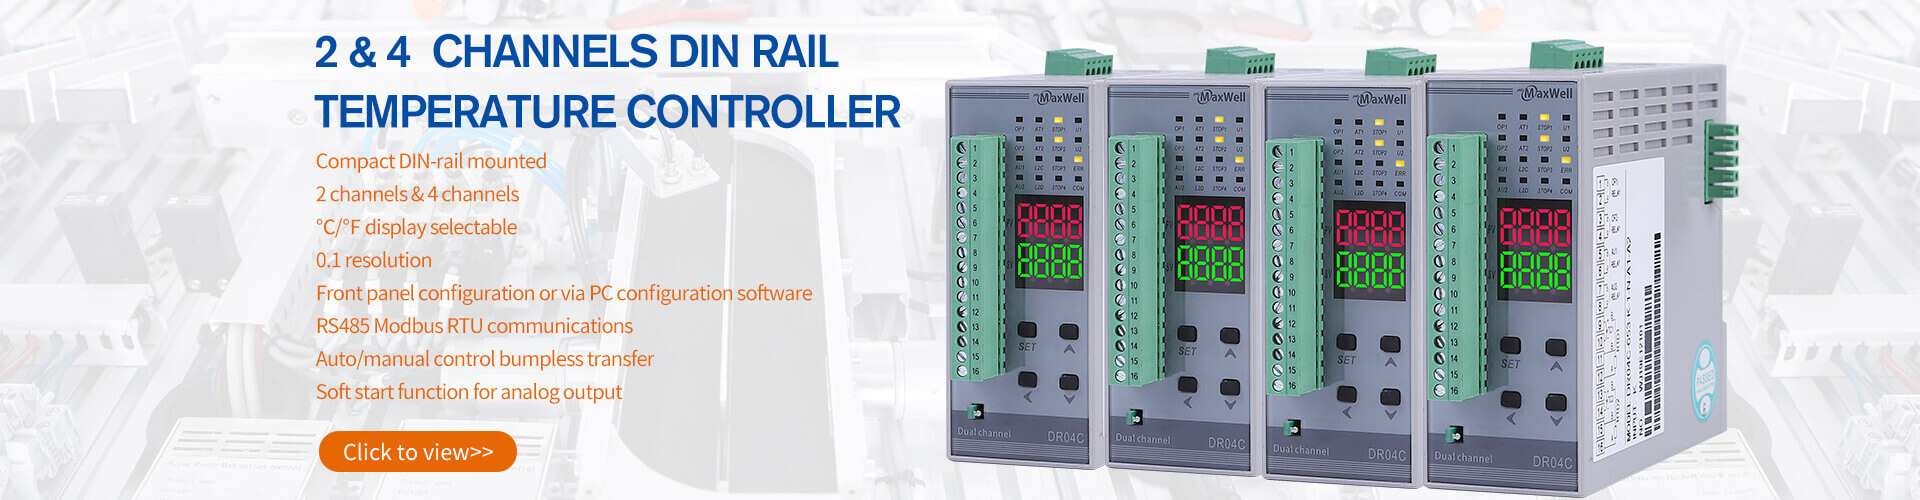 DIN rail mount temperature controller